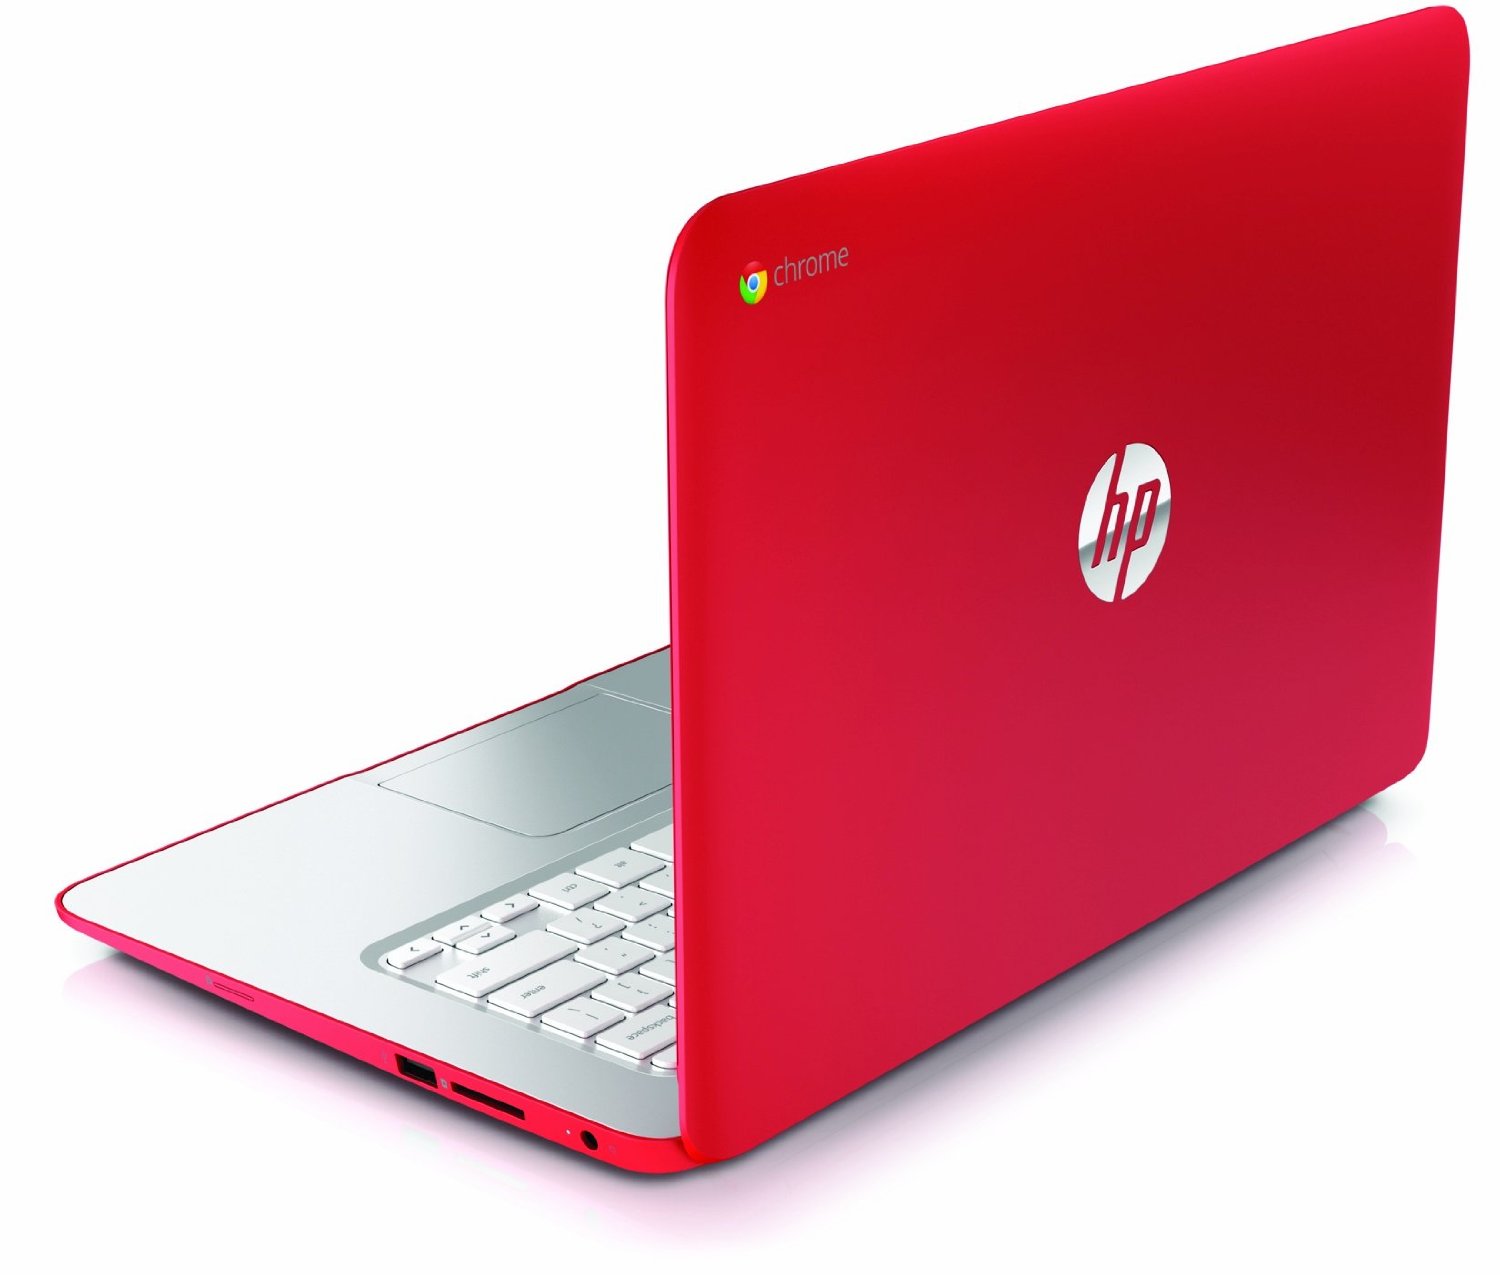 Chromebook 14 від Hewlett Packard. Фото: amazon.com